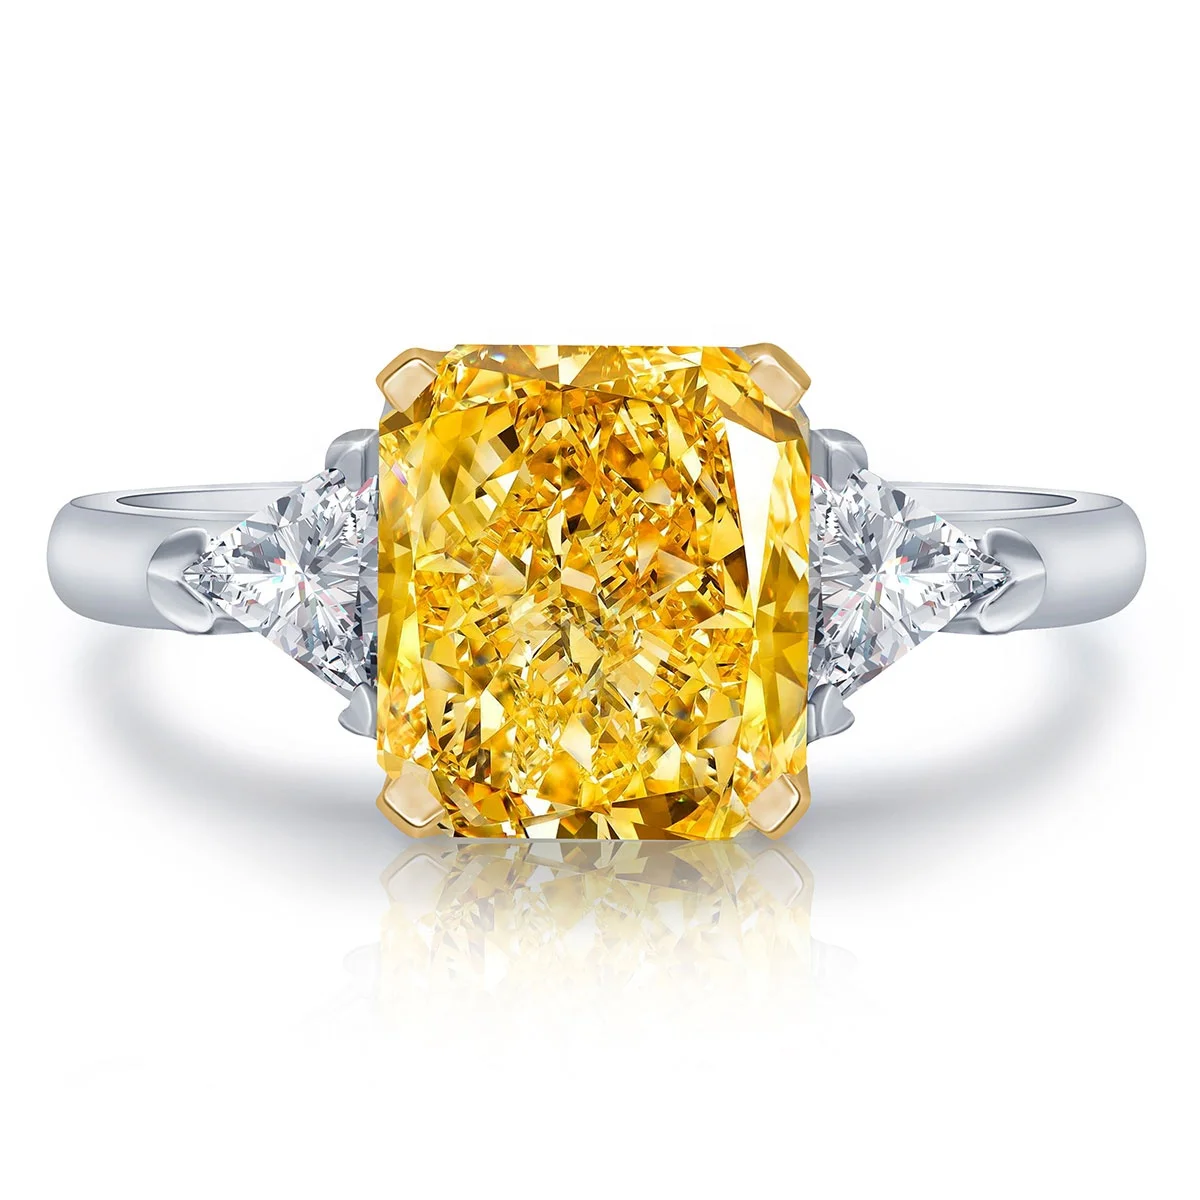 

3.0ct three stones band silver 925 fashion women gemstone jewelry wedding engagement ring diamond, Yellow, pink, blue, white